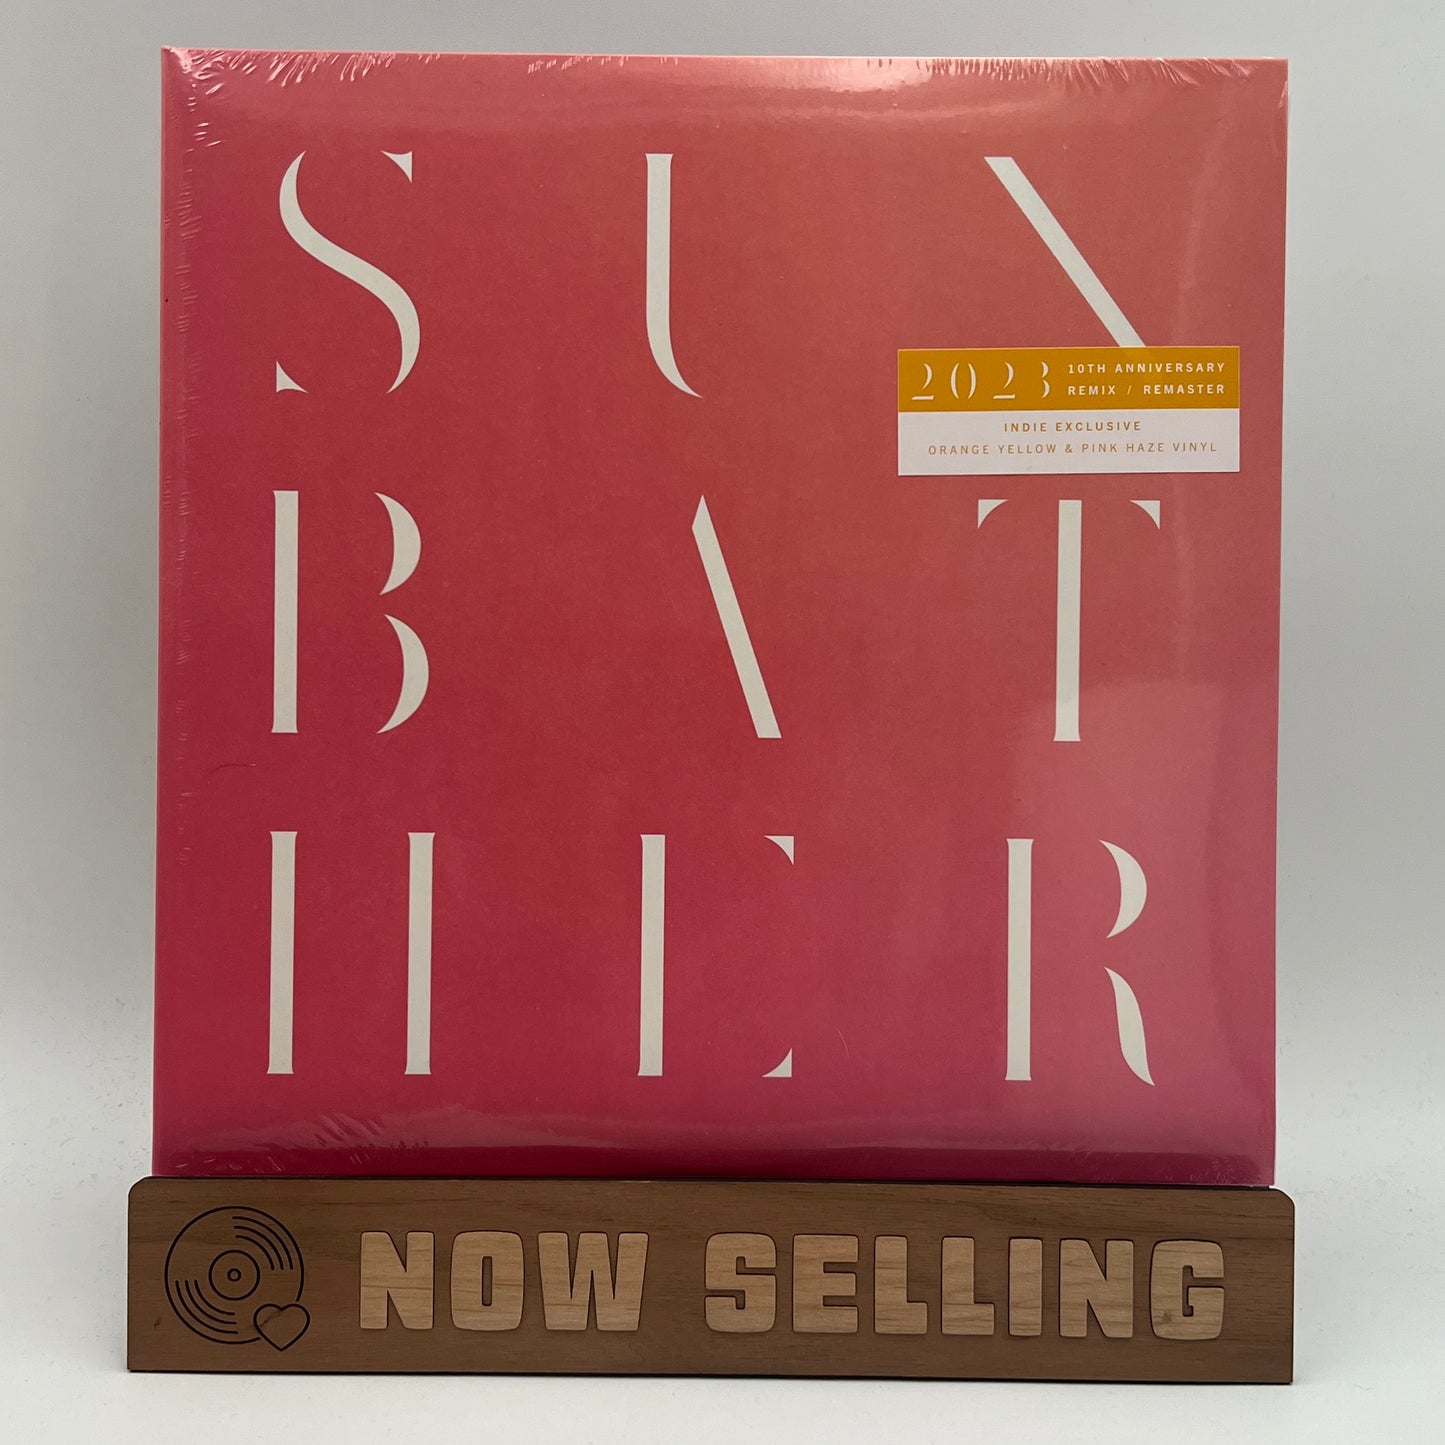 Deafheaven - Sunbather Vinyl LP 10th Anniversary Remix / Remaster Indie Haze SEALED